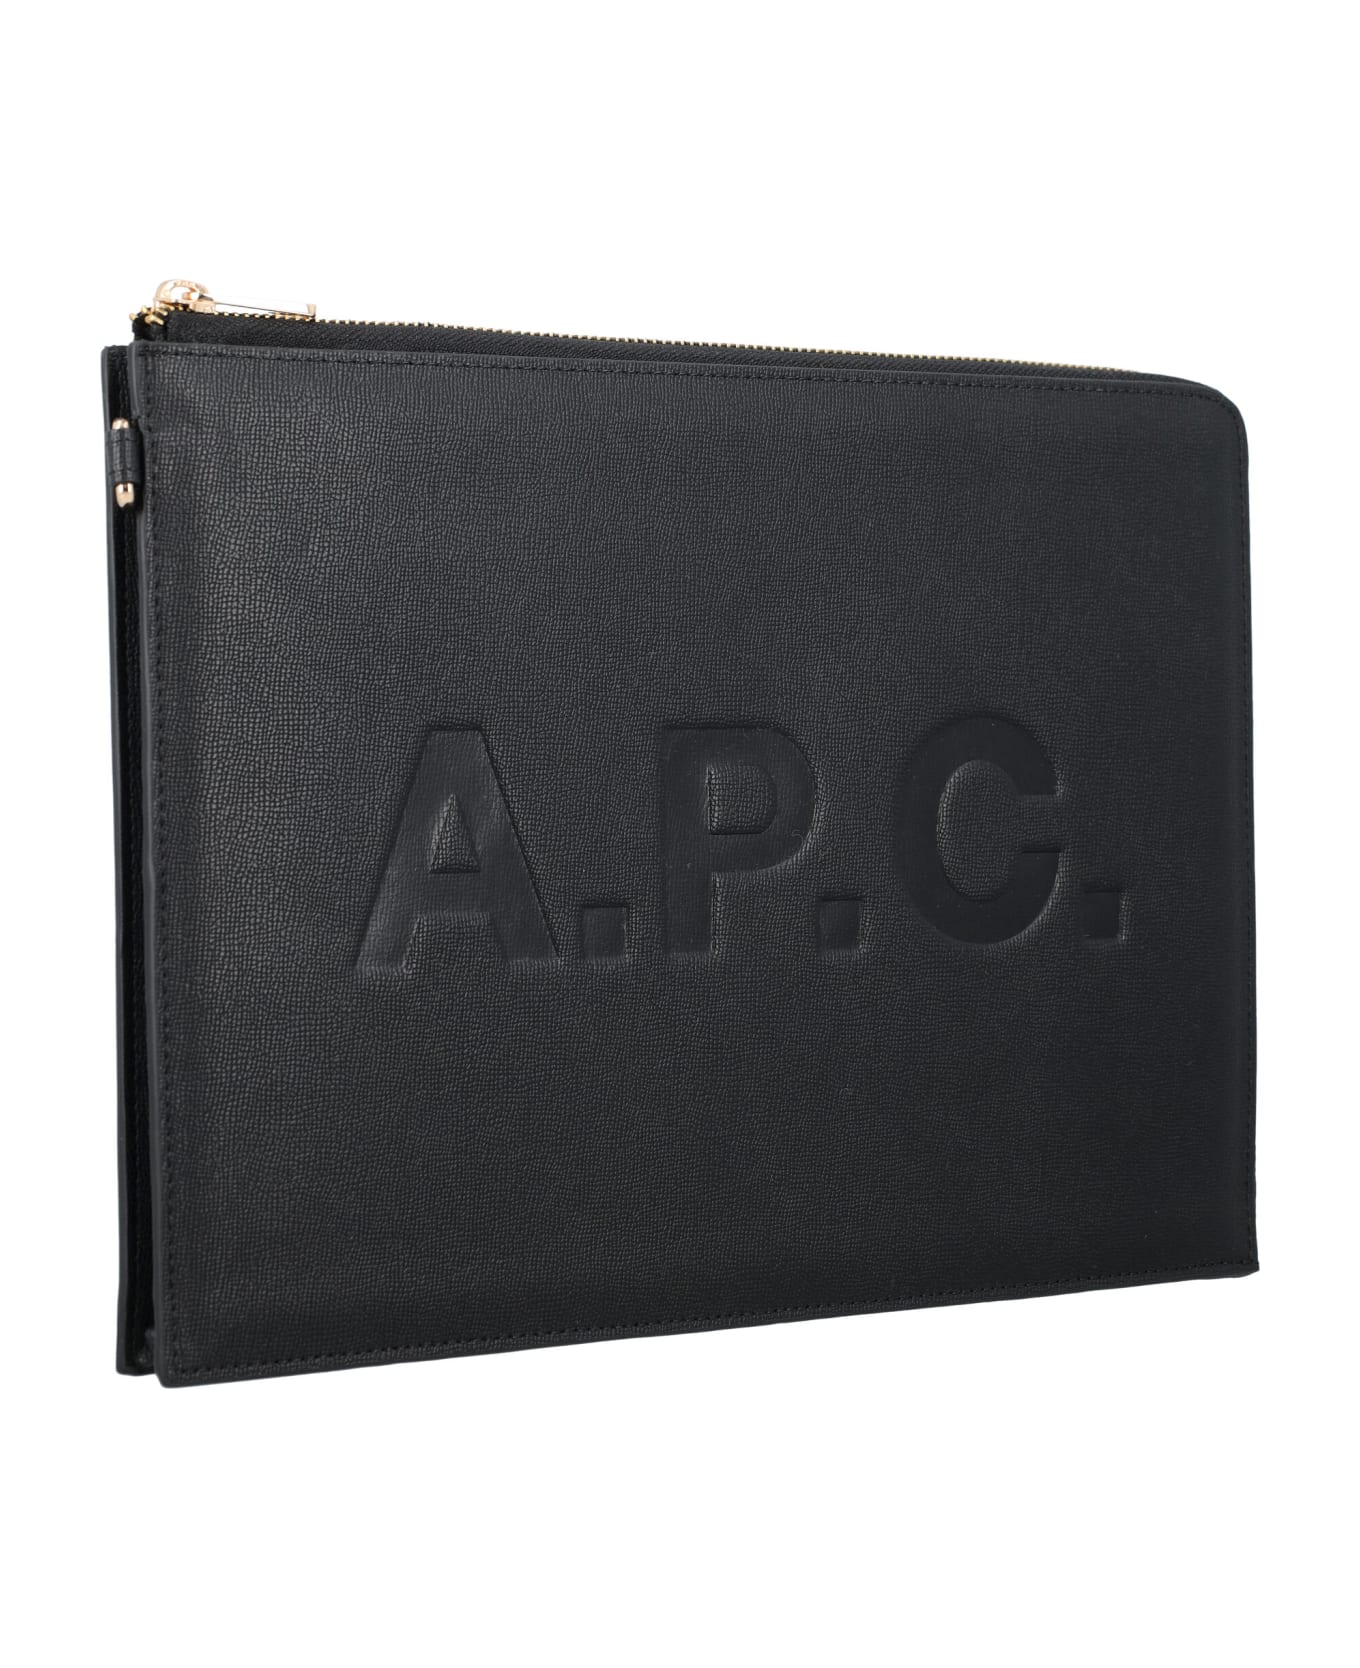 A.P.C. Tablet Bag - BLACK